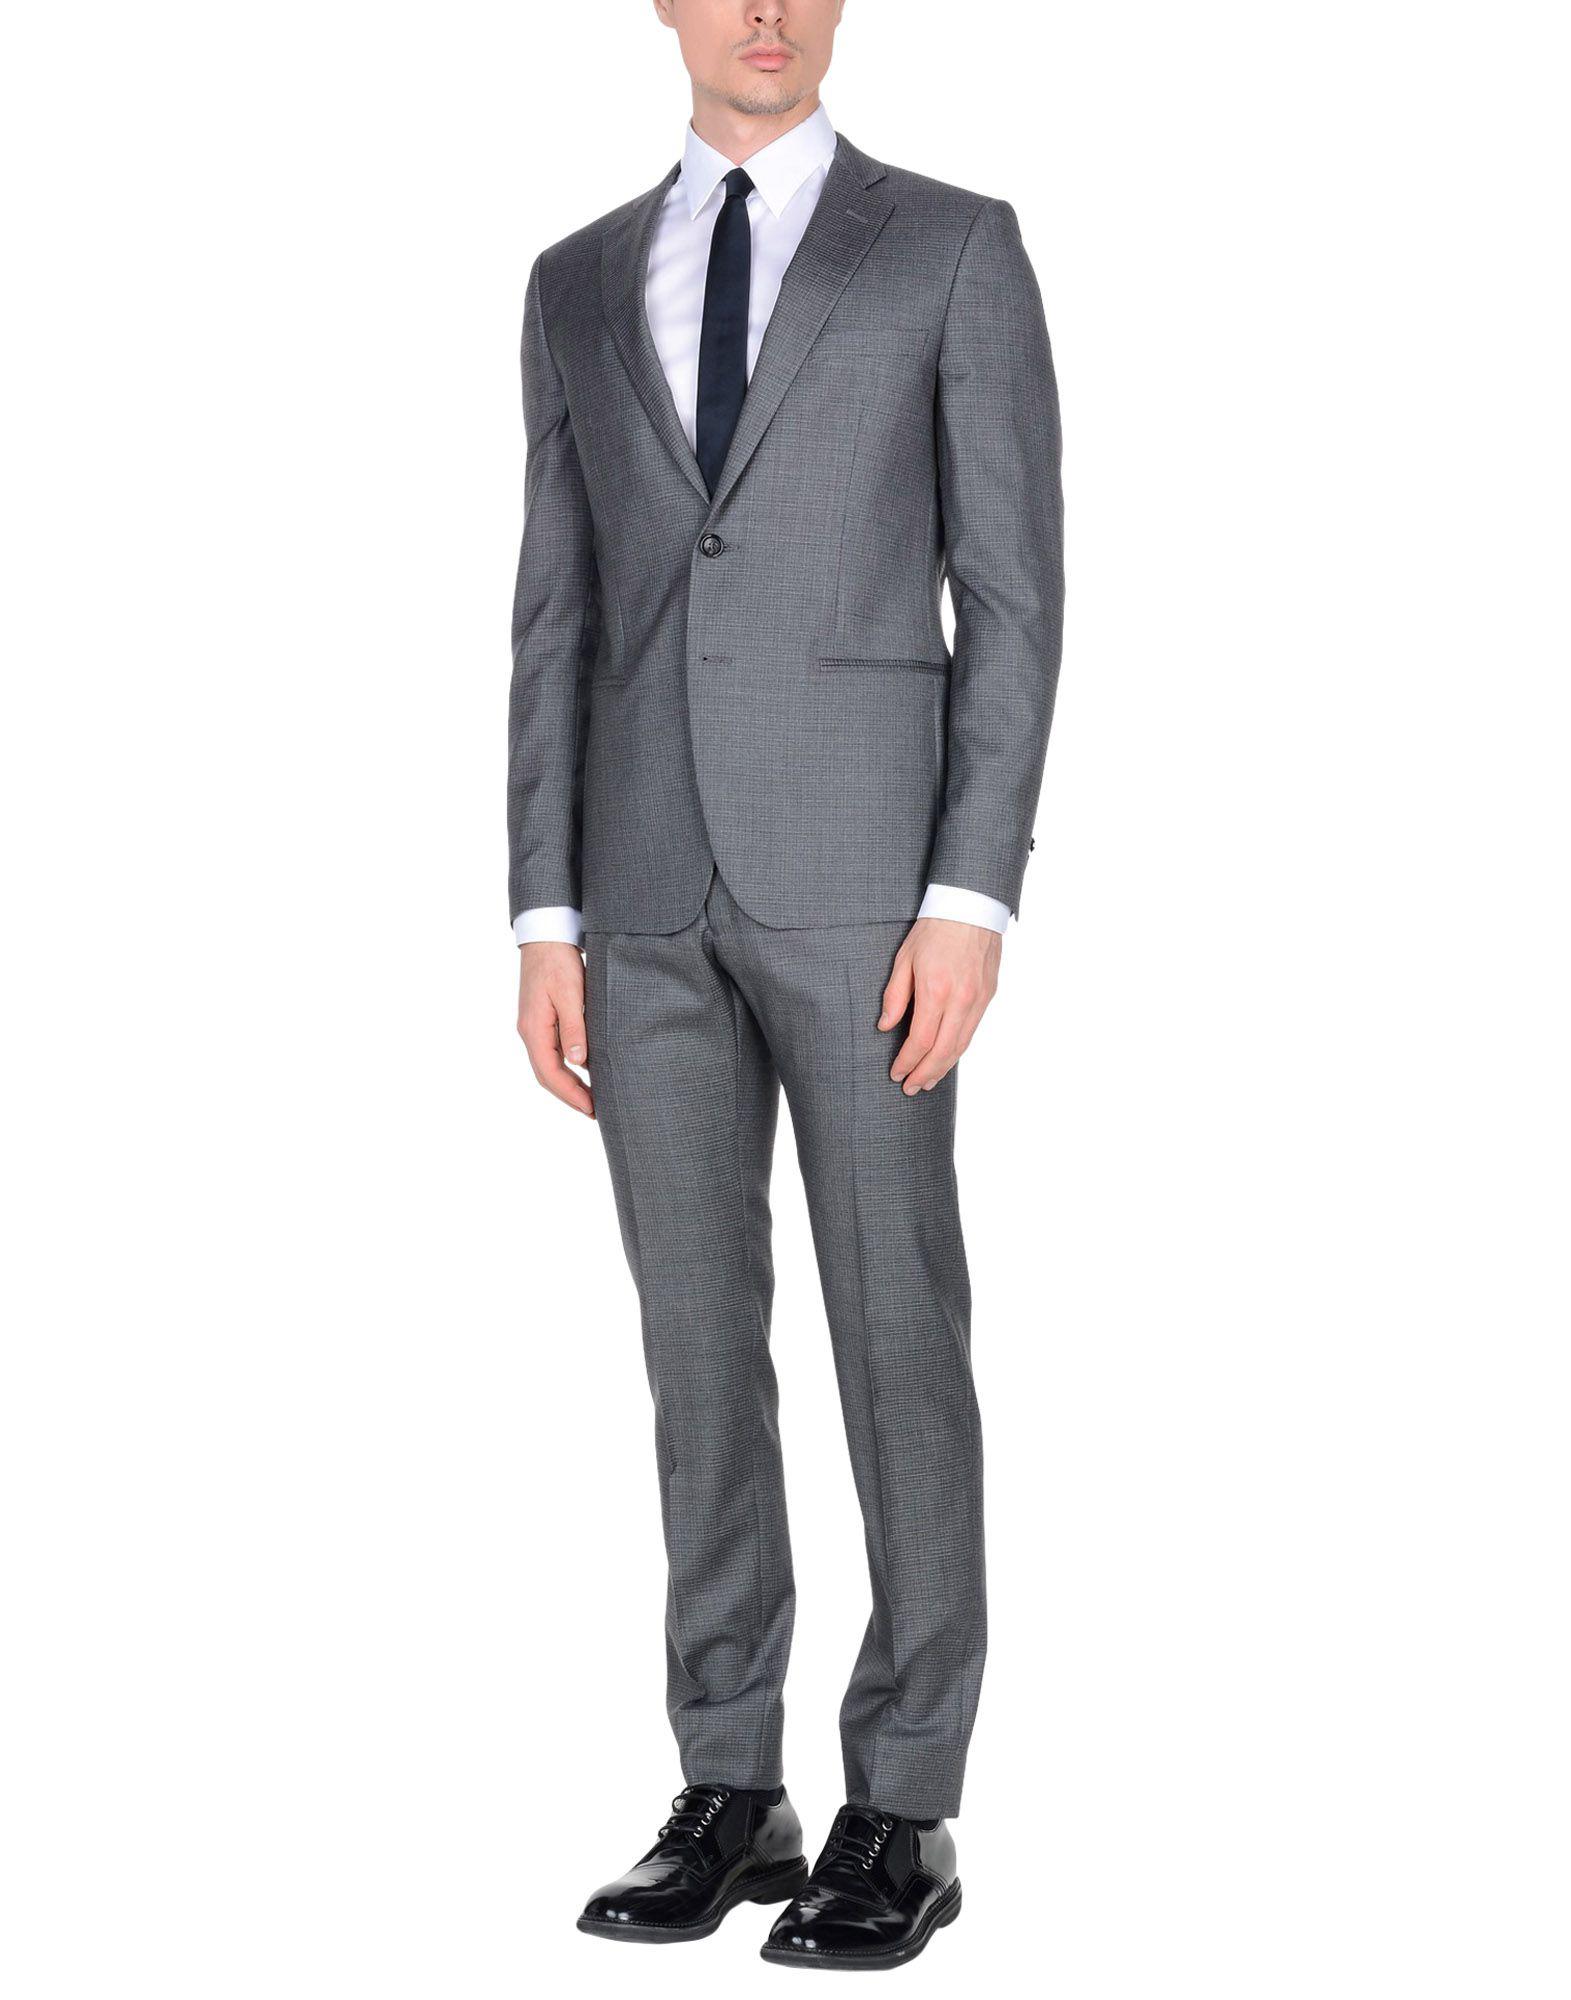 Tonello Wool Suit in Lead (Gray) for Men - Lyst